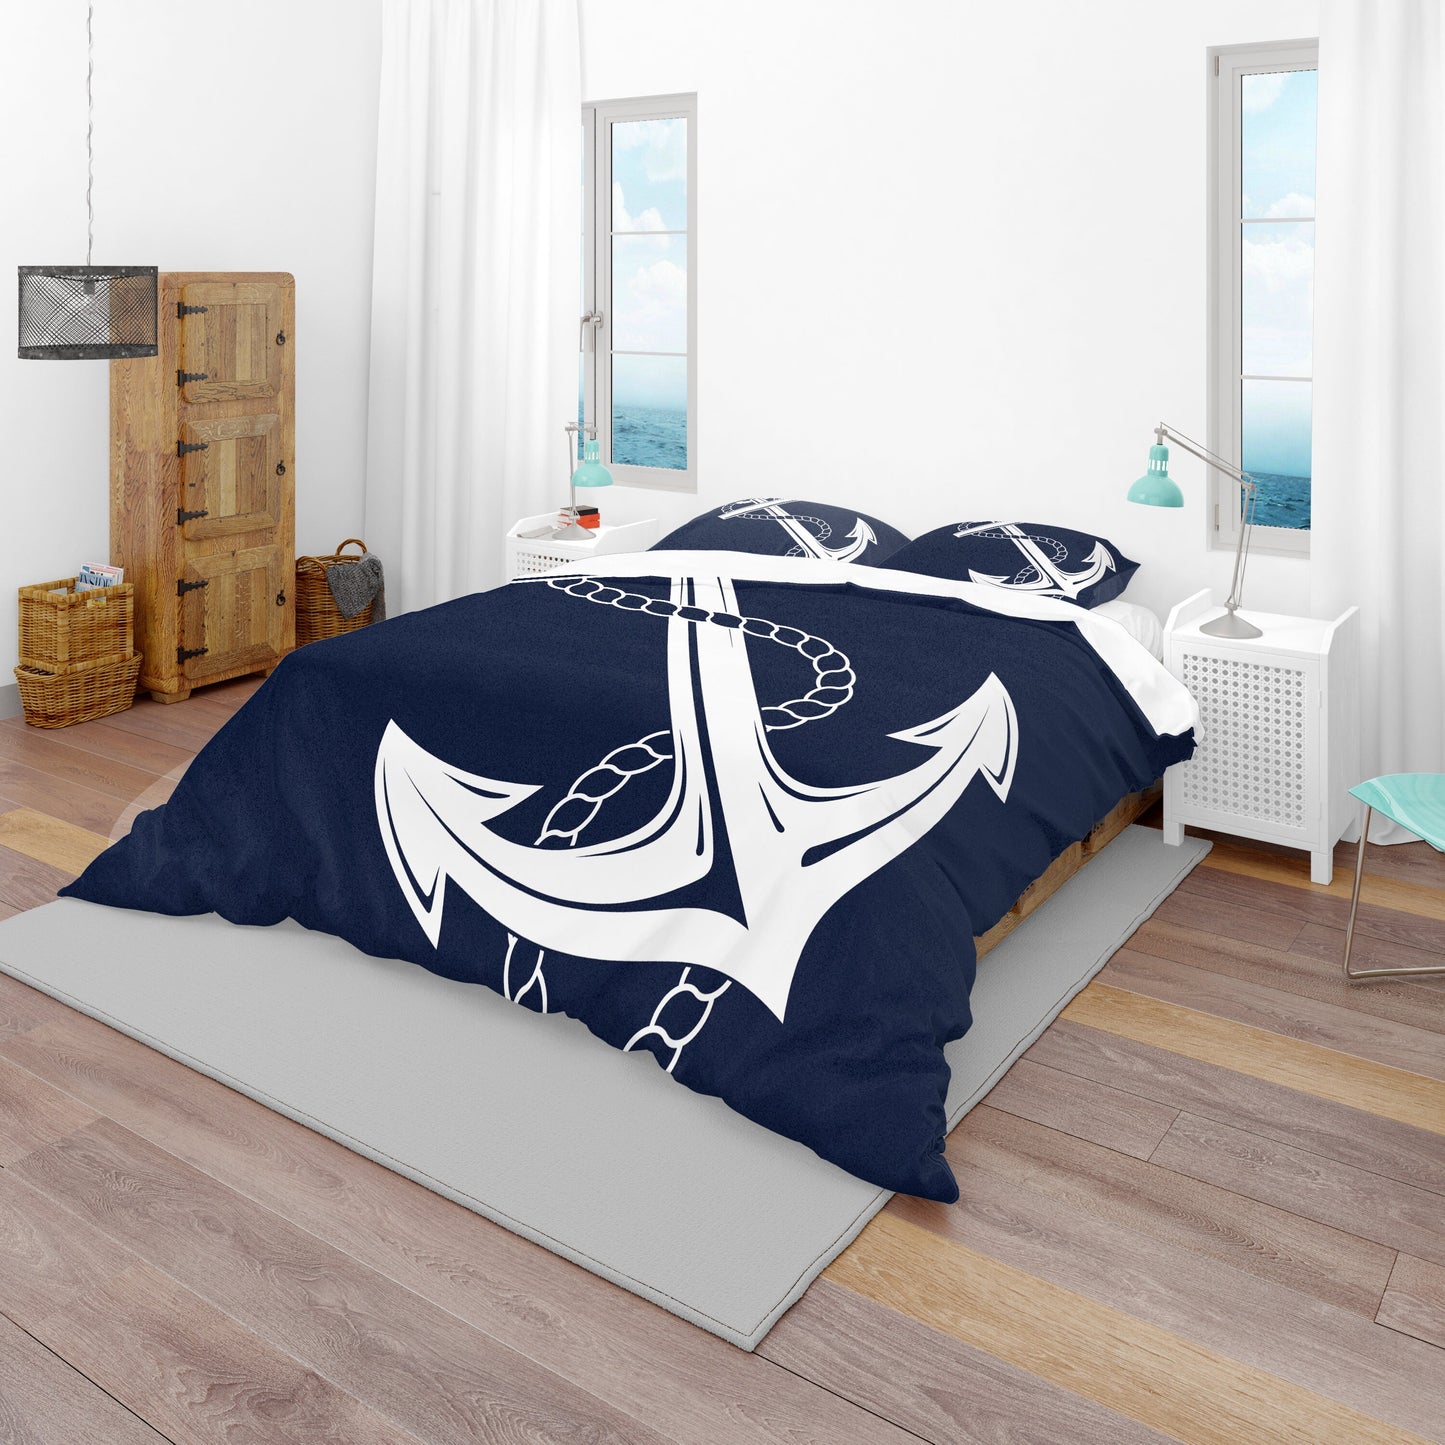 Anchor Duvet Cover or Comforter nautical bedding achors navy & white bedding beachy comforter ocean duvet covers boaters bedding